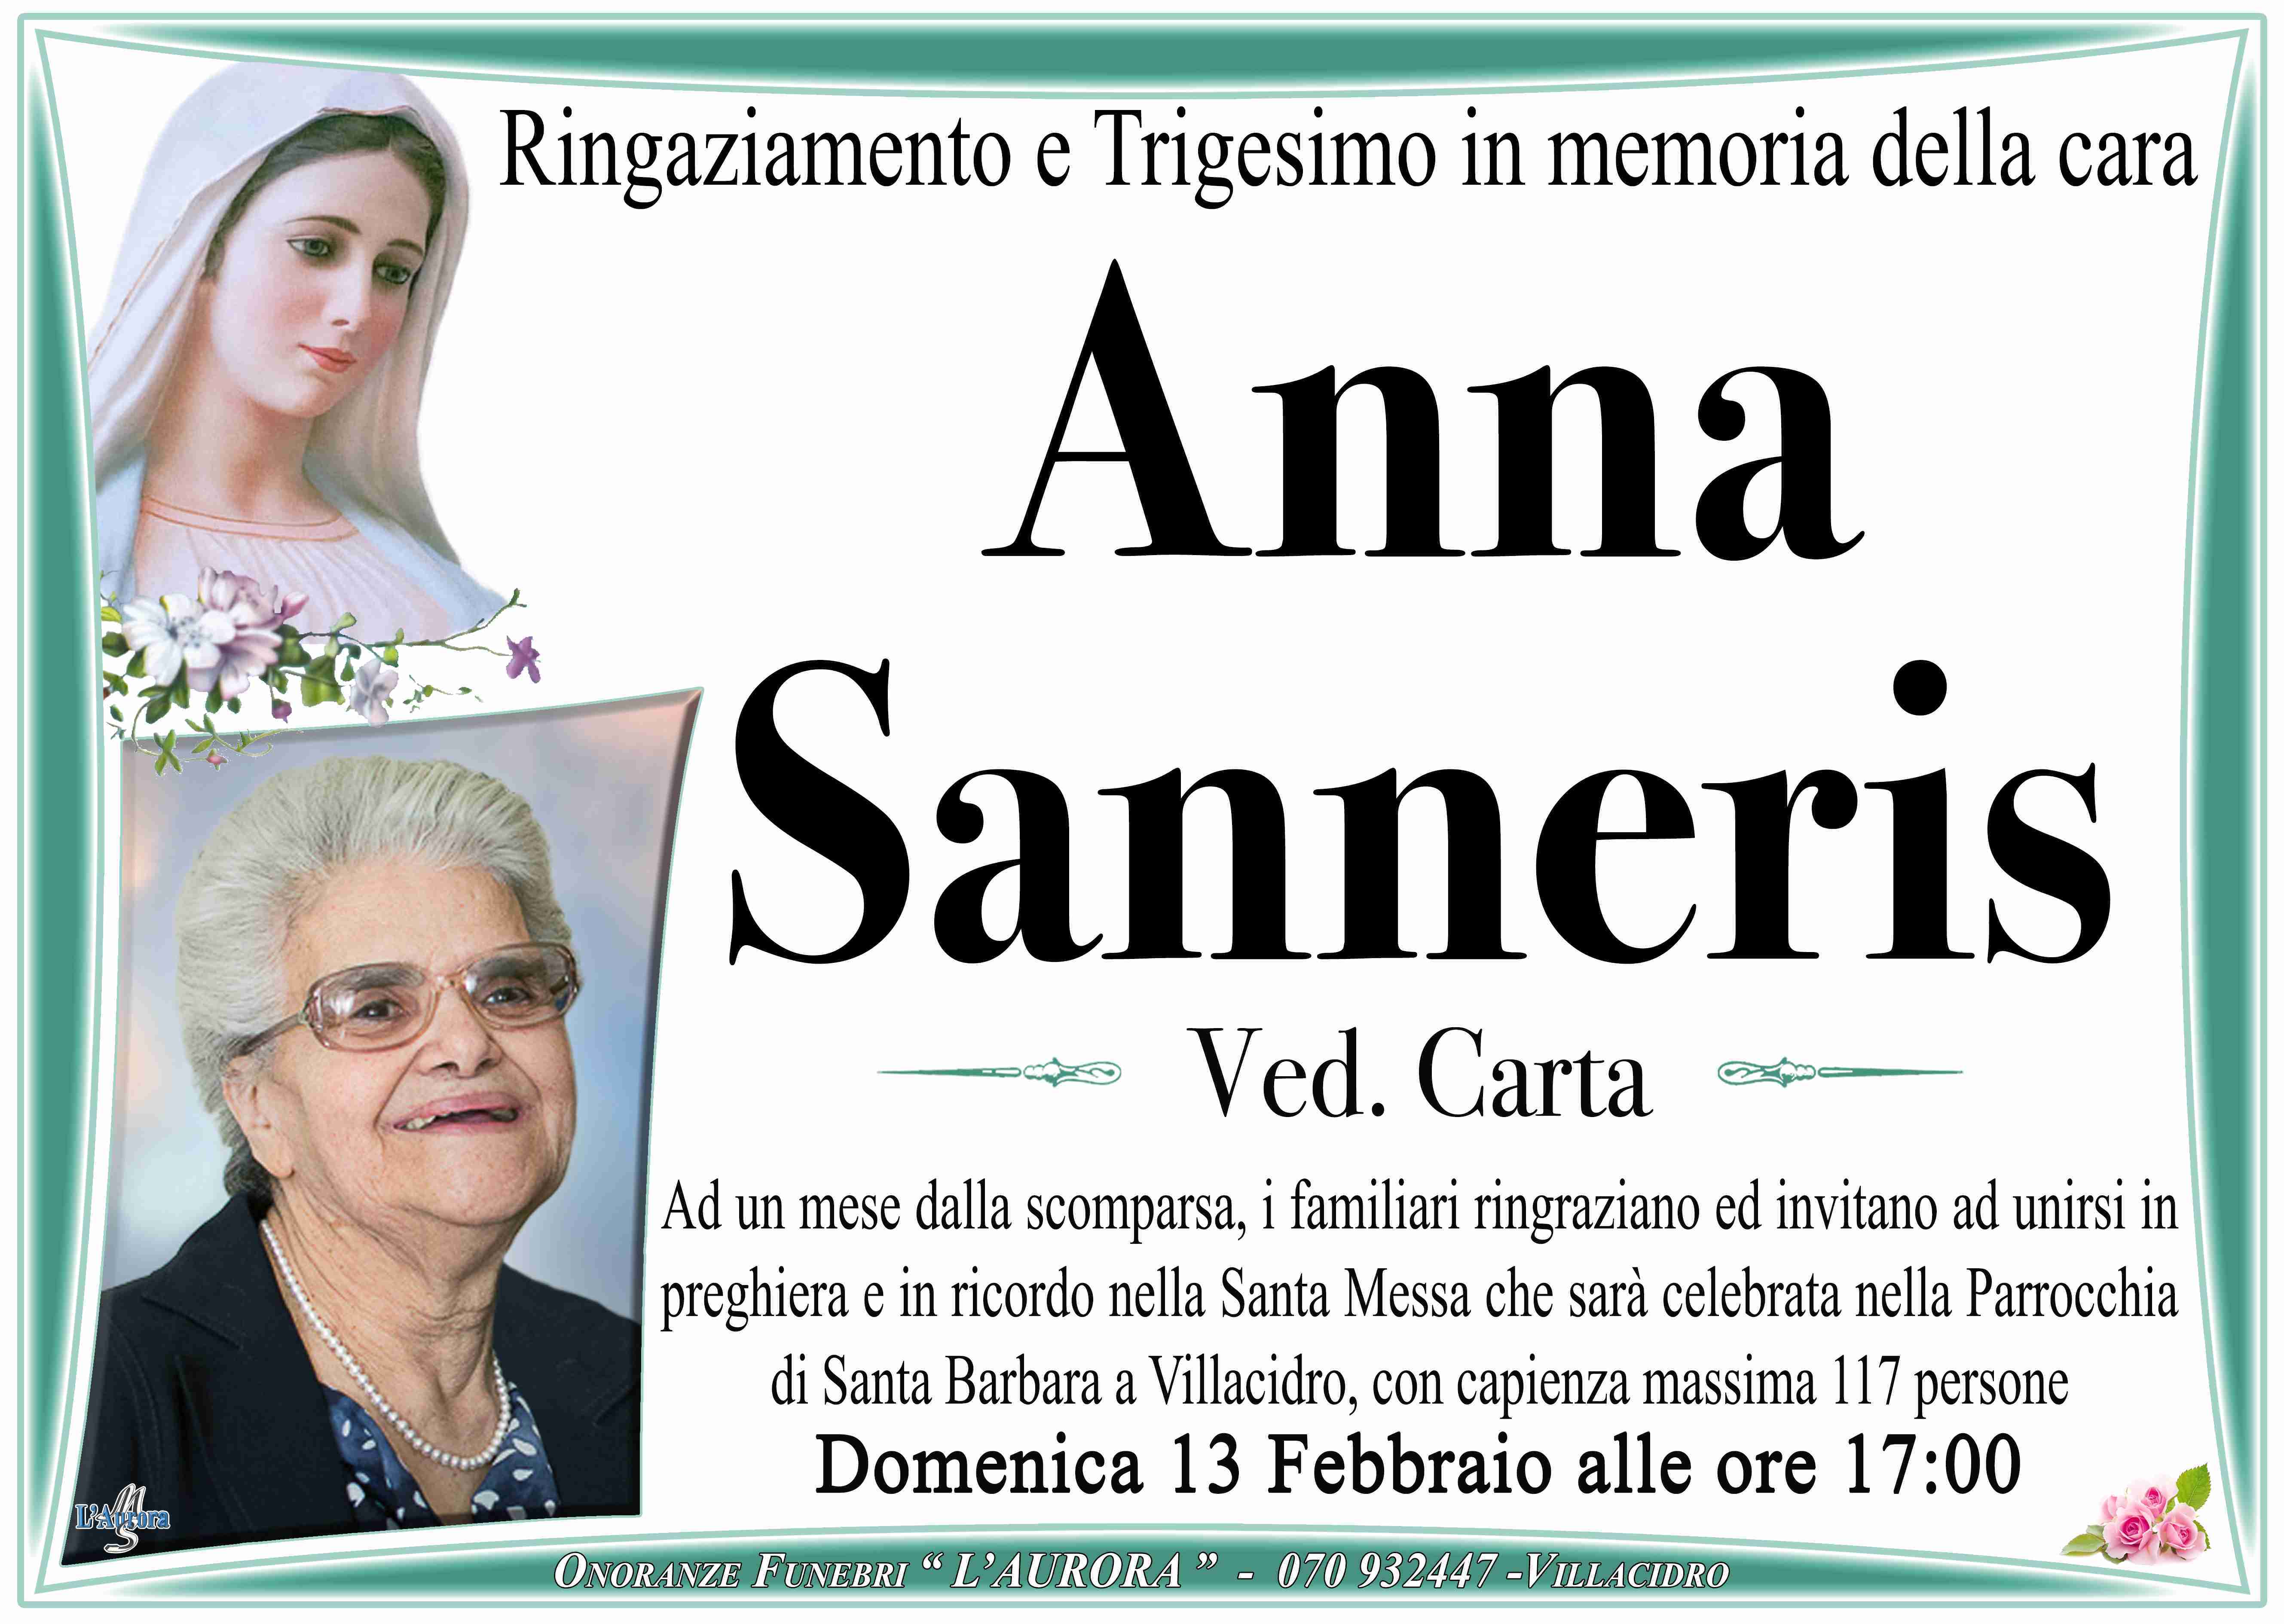 Anna Sanneris